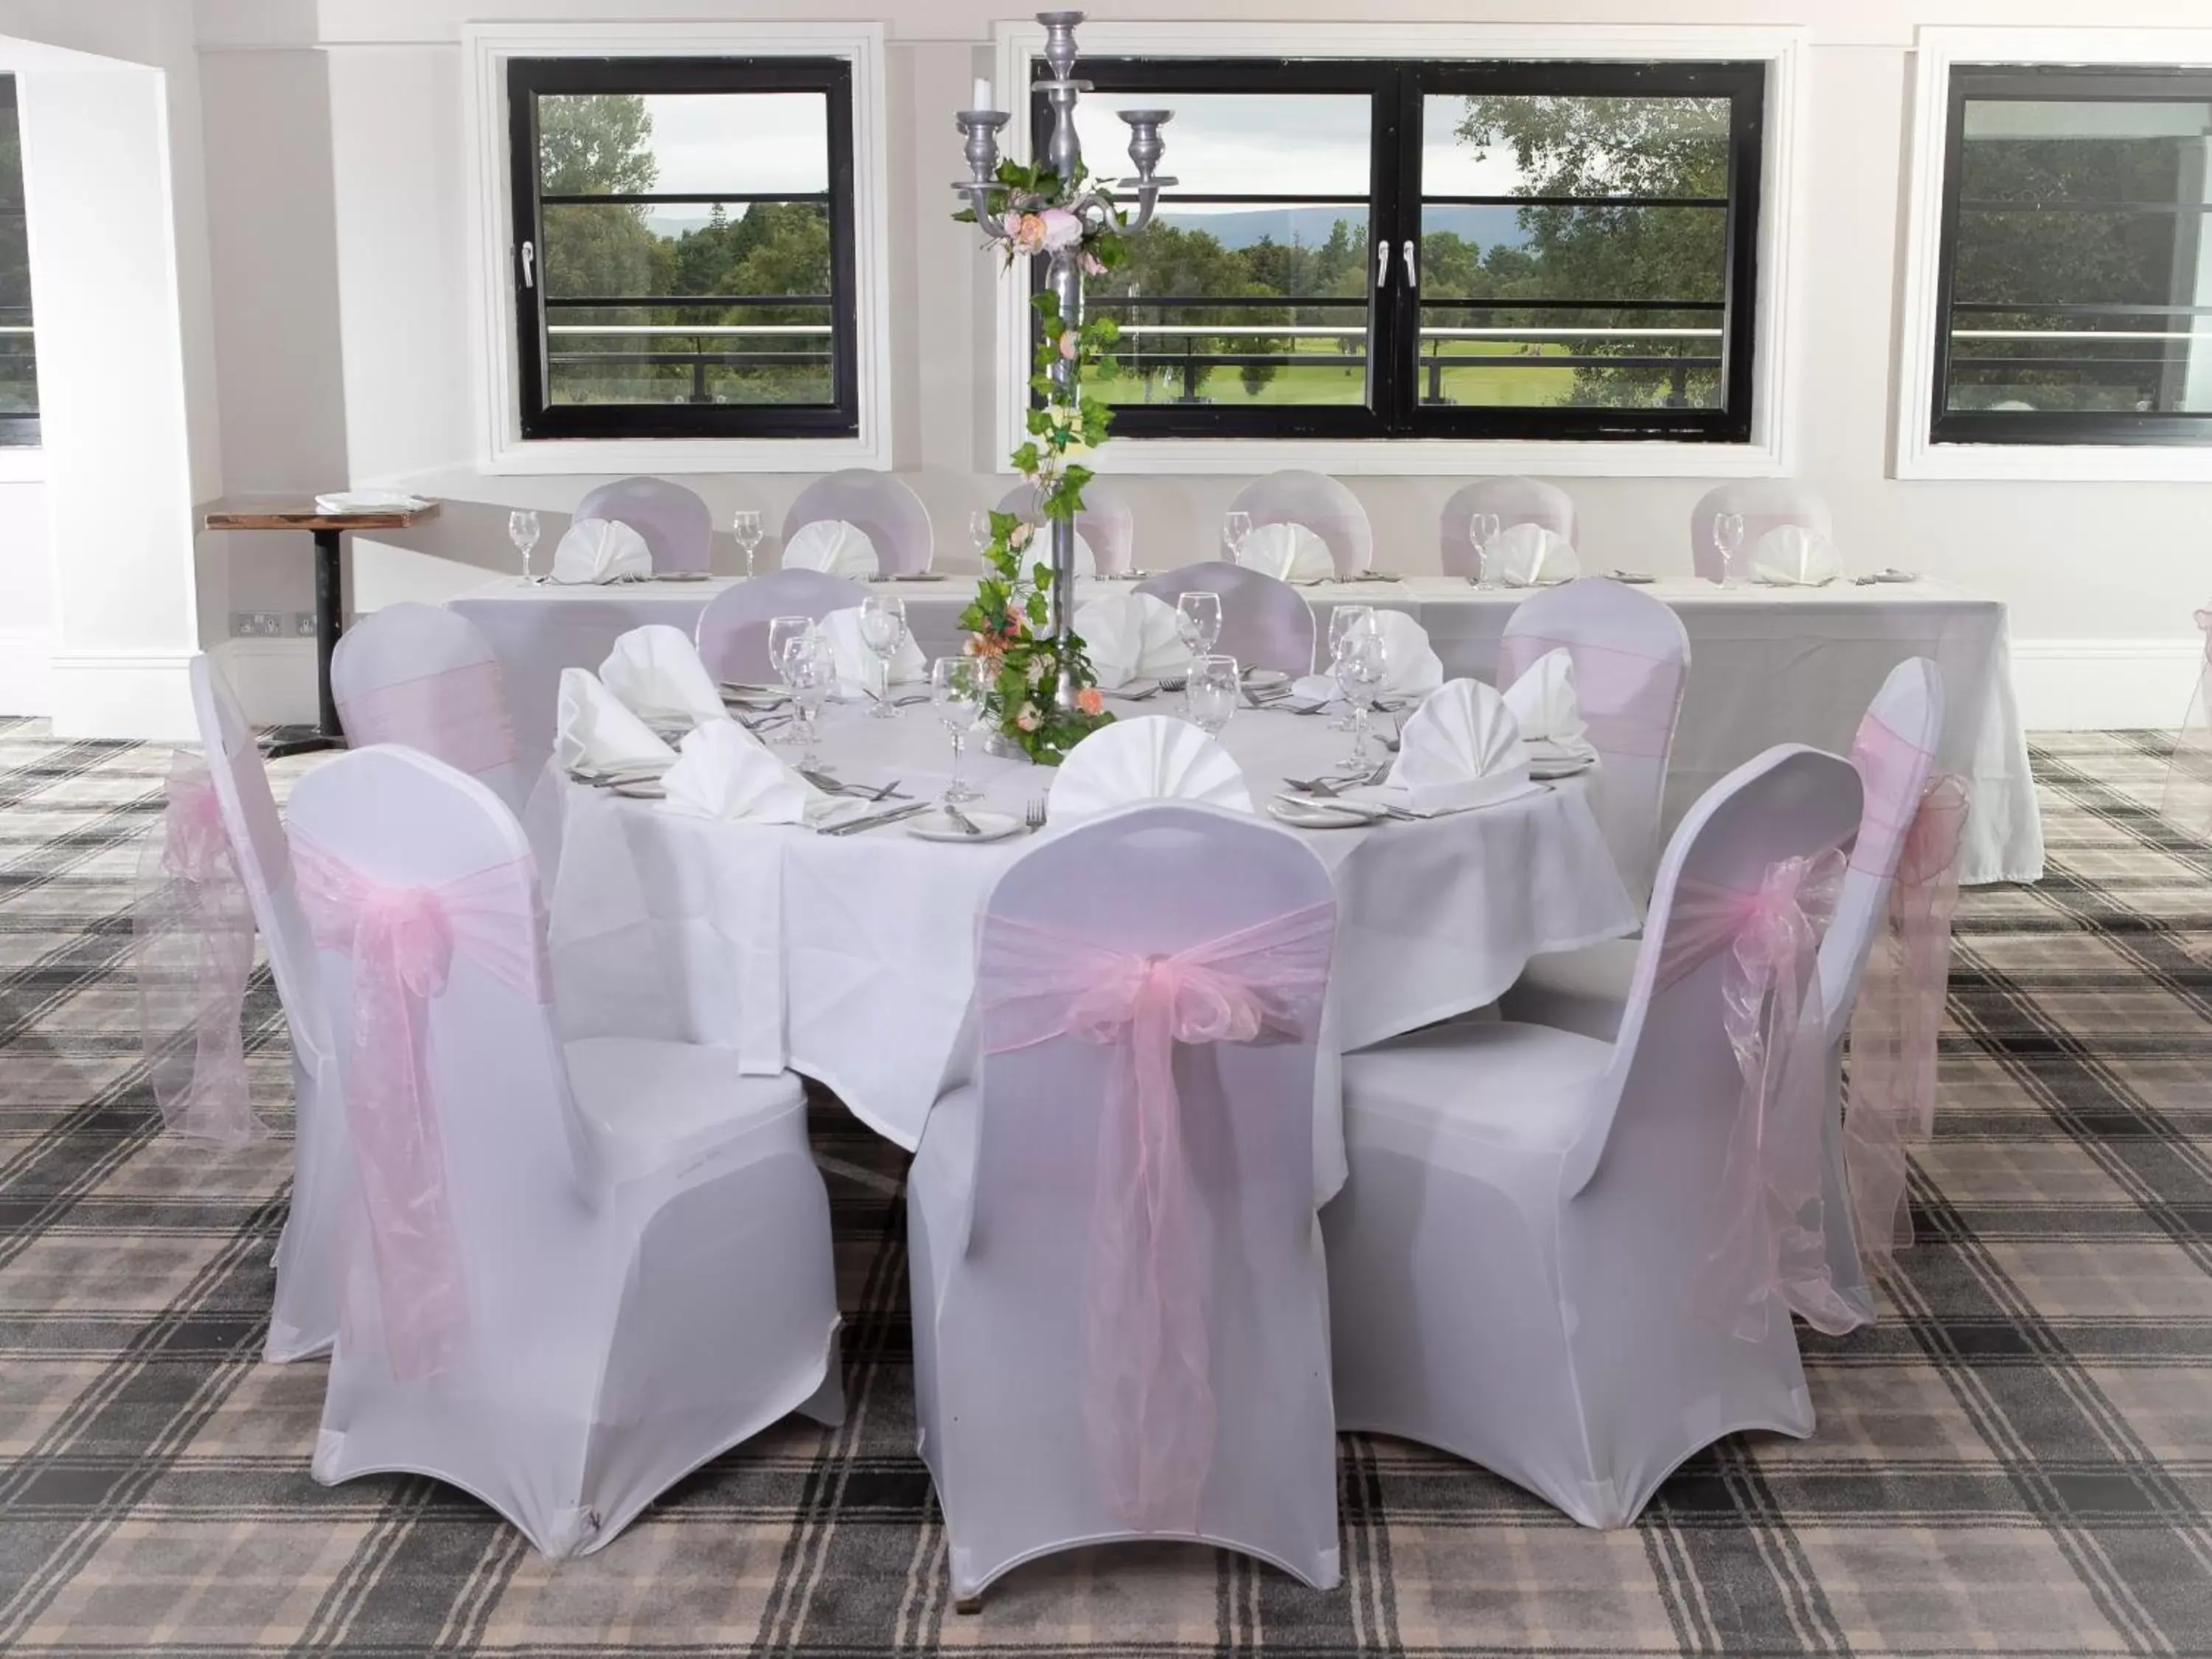 Banquet Facilities in Crowwood Hotel and Alba Restaurant